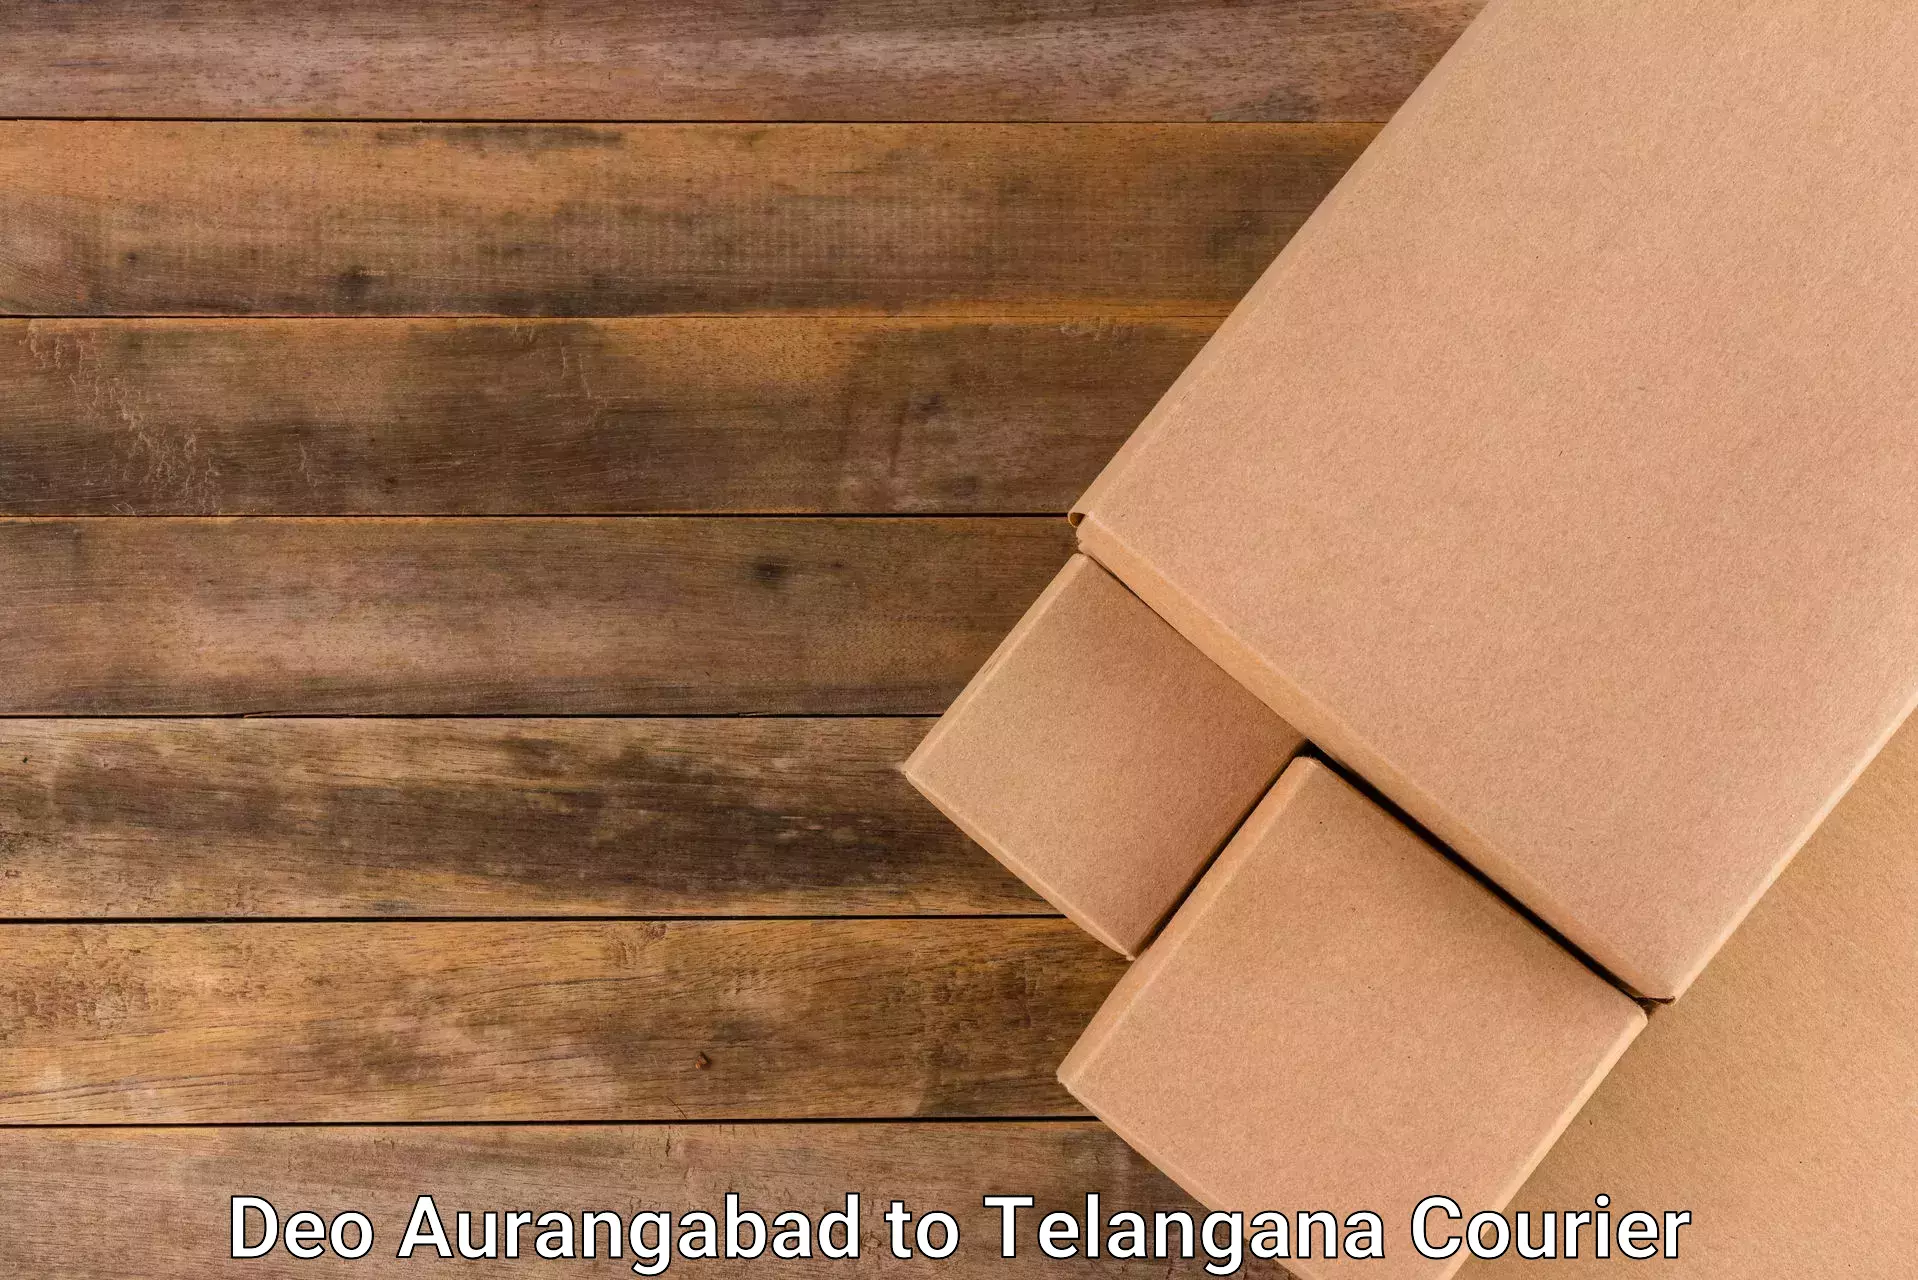 Express logistics providers Deo Aurangabad to Koratla